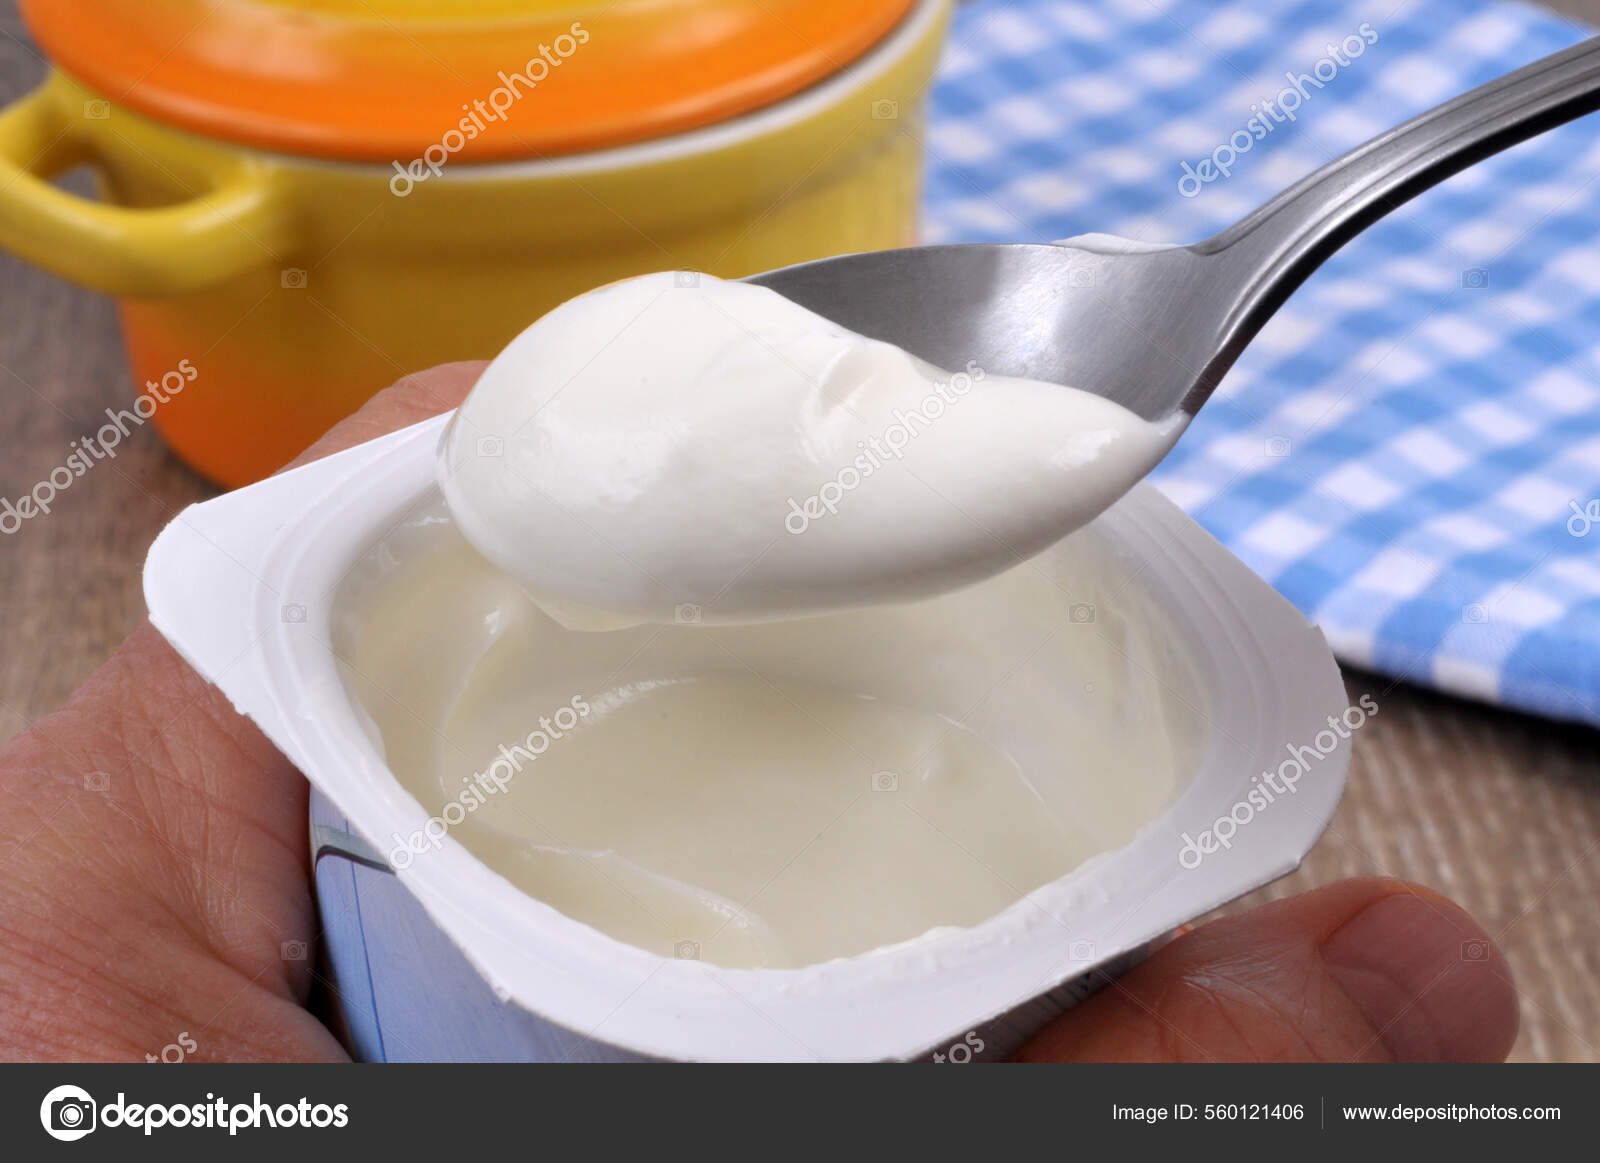 https://st.depositphotos.com/17499462/56012/i/1600/depositphotos_560121406-stock-photo-eating-plain-yogurt-spoon-close.jpg